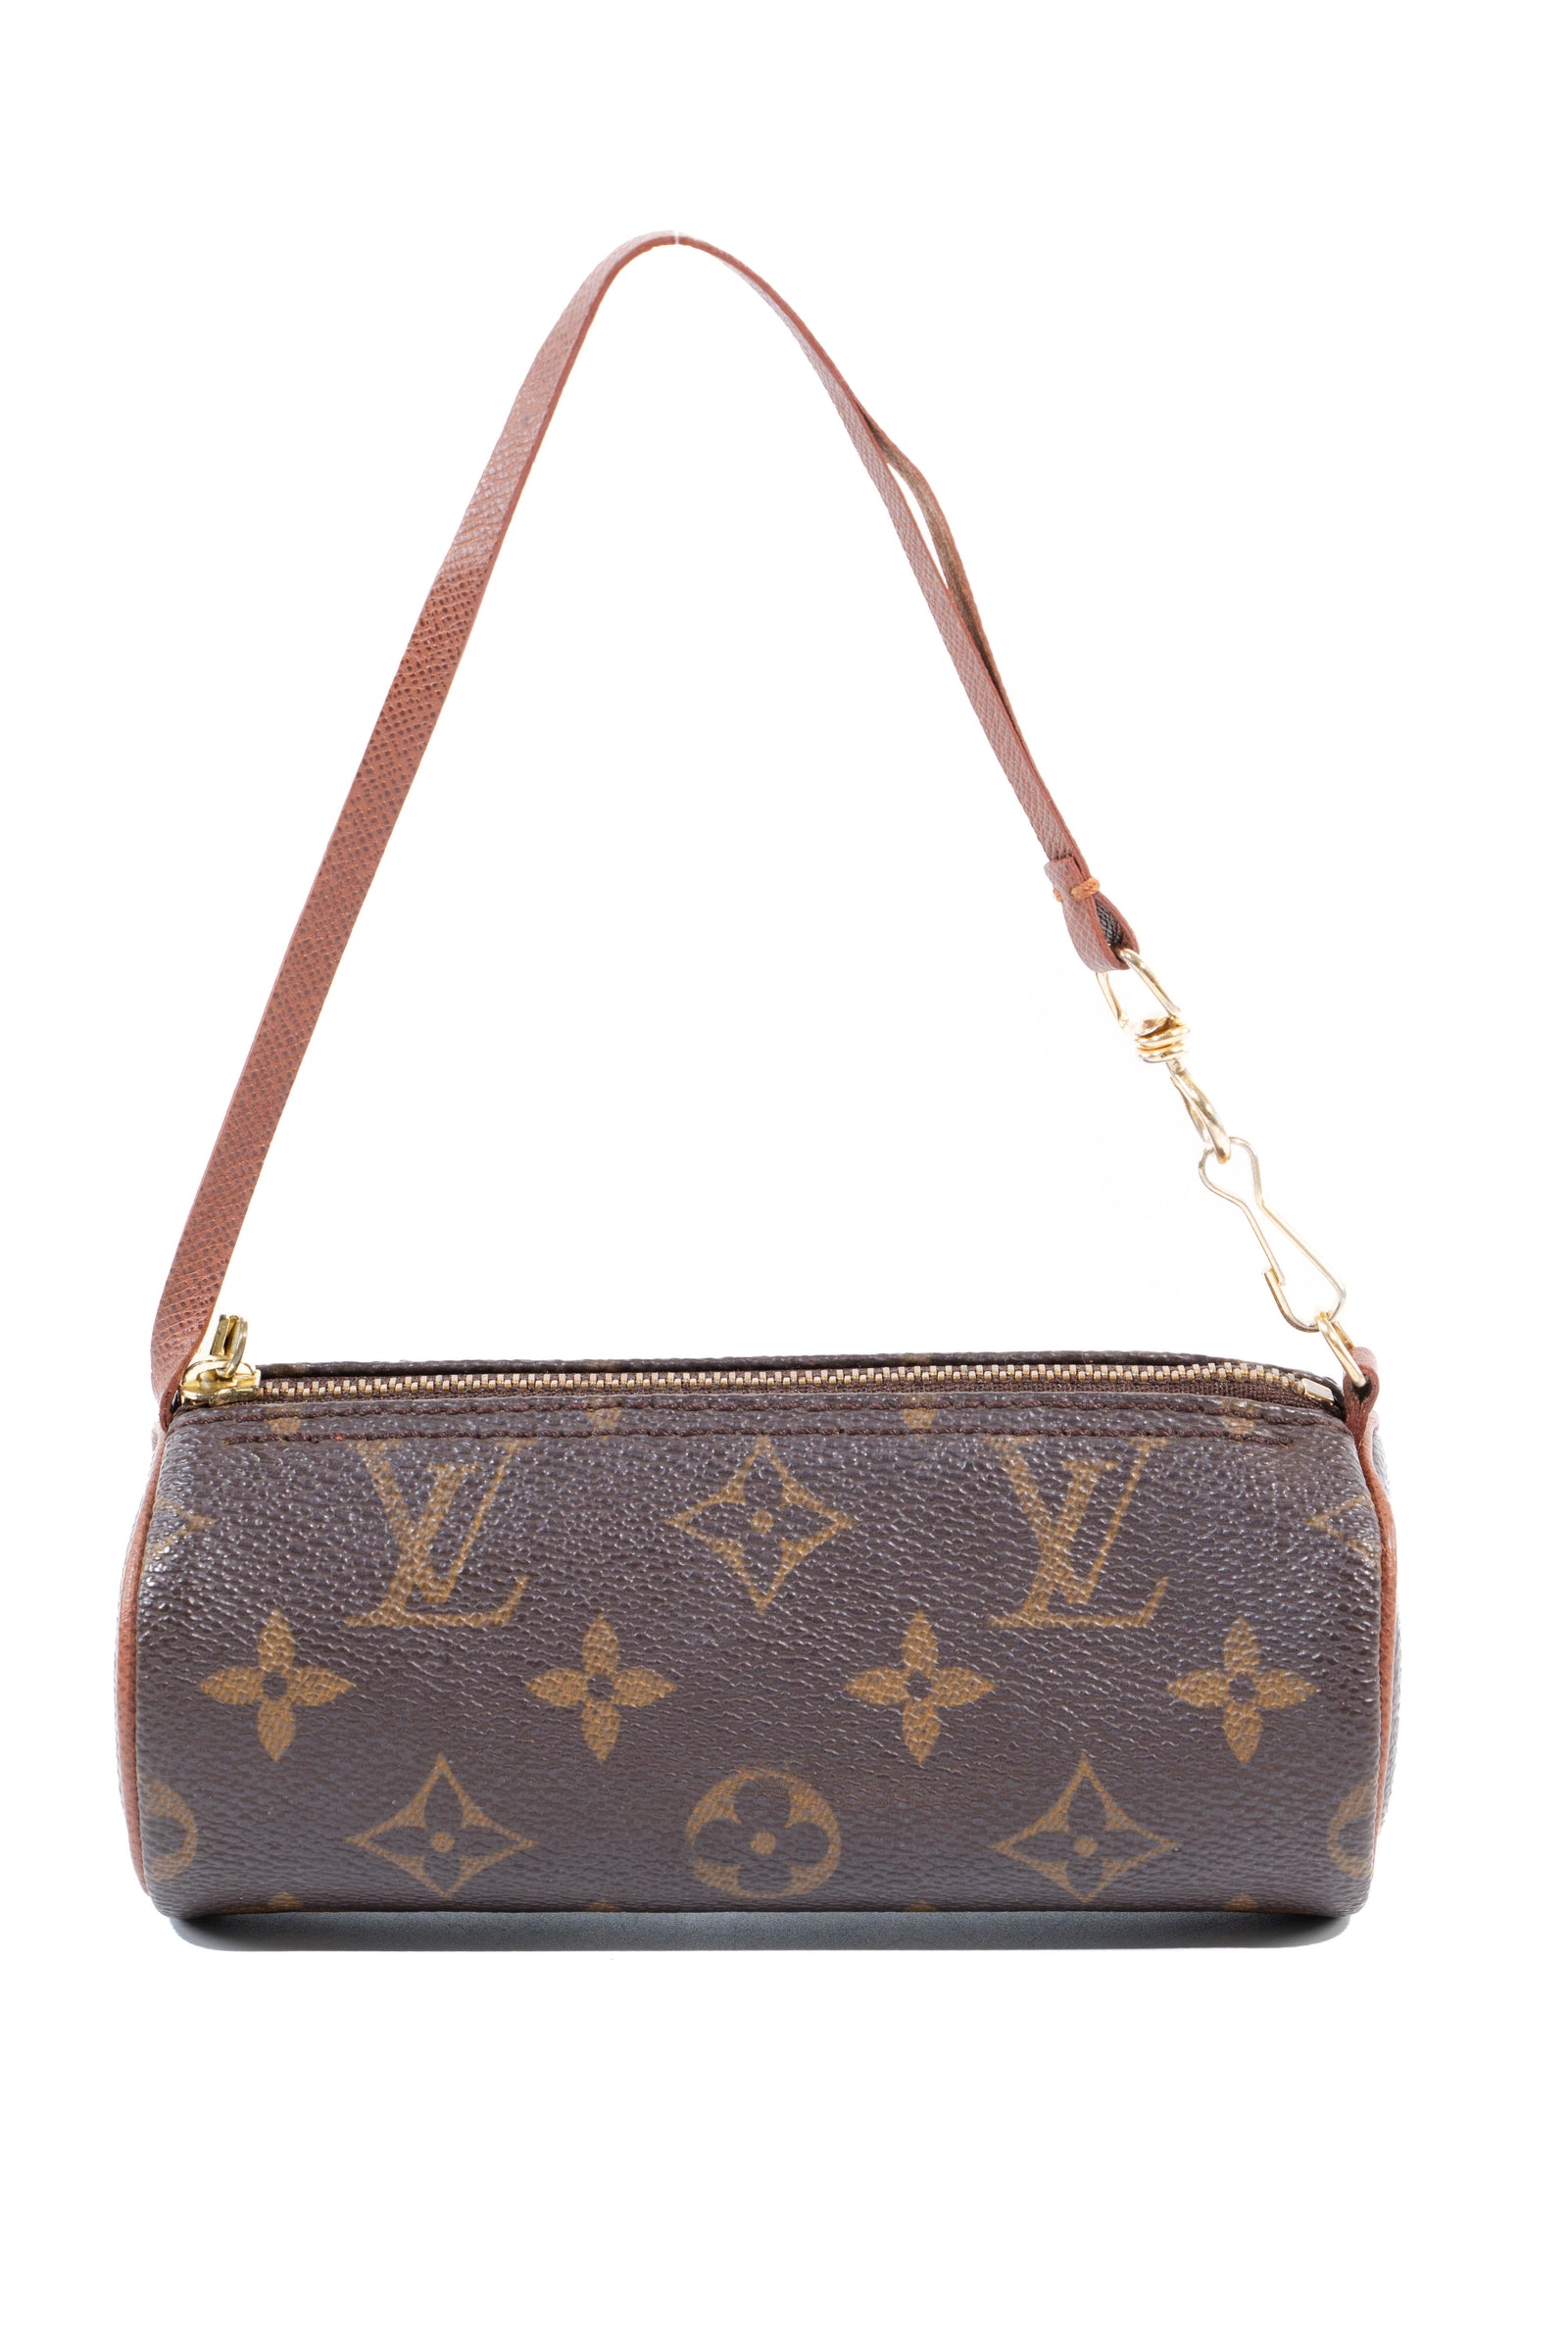 Louis Vuitton, Bags, Louis Vuitton Mini Monogram Barrel Bag